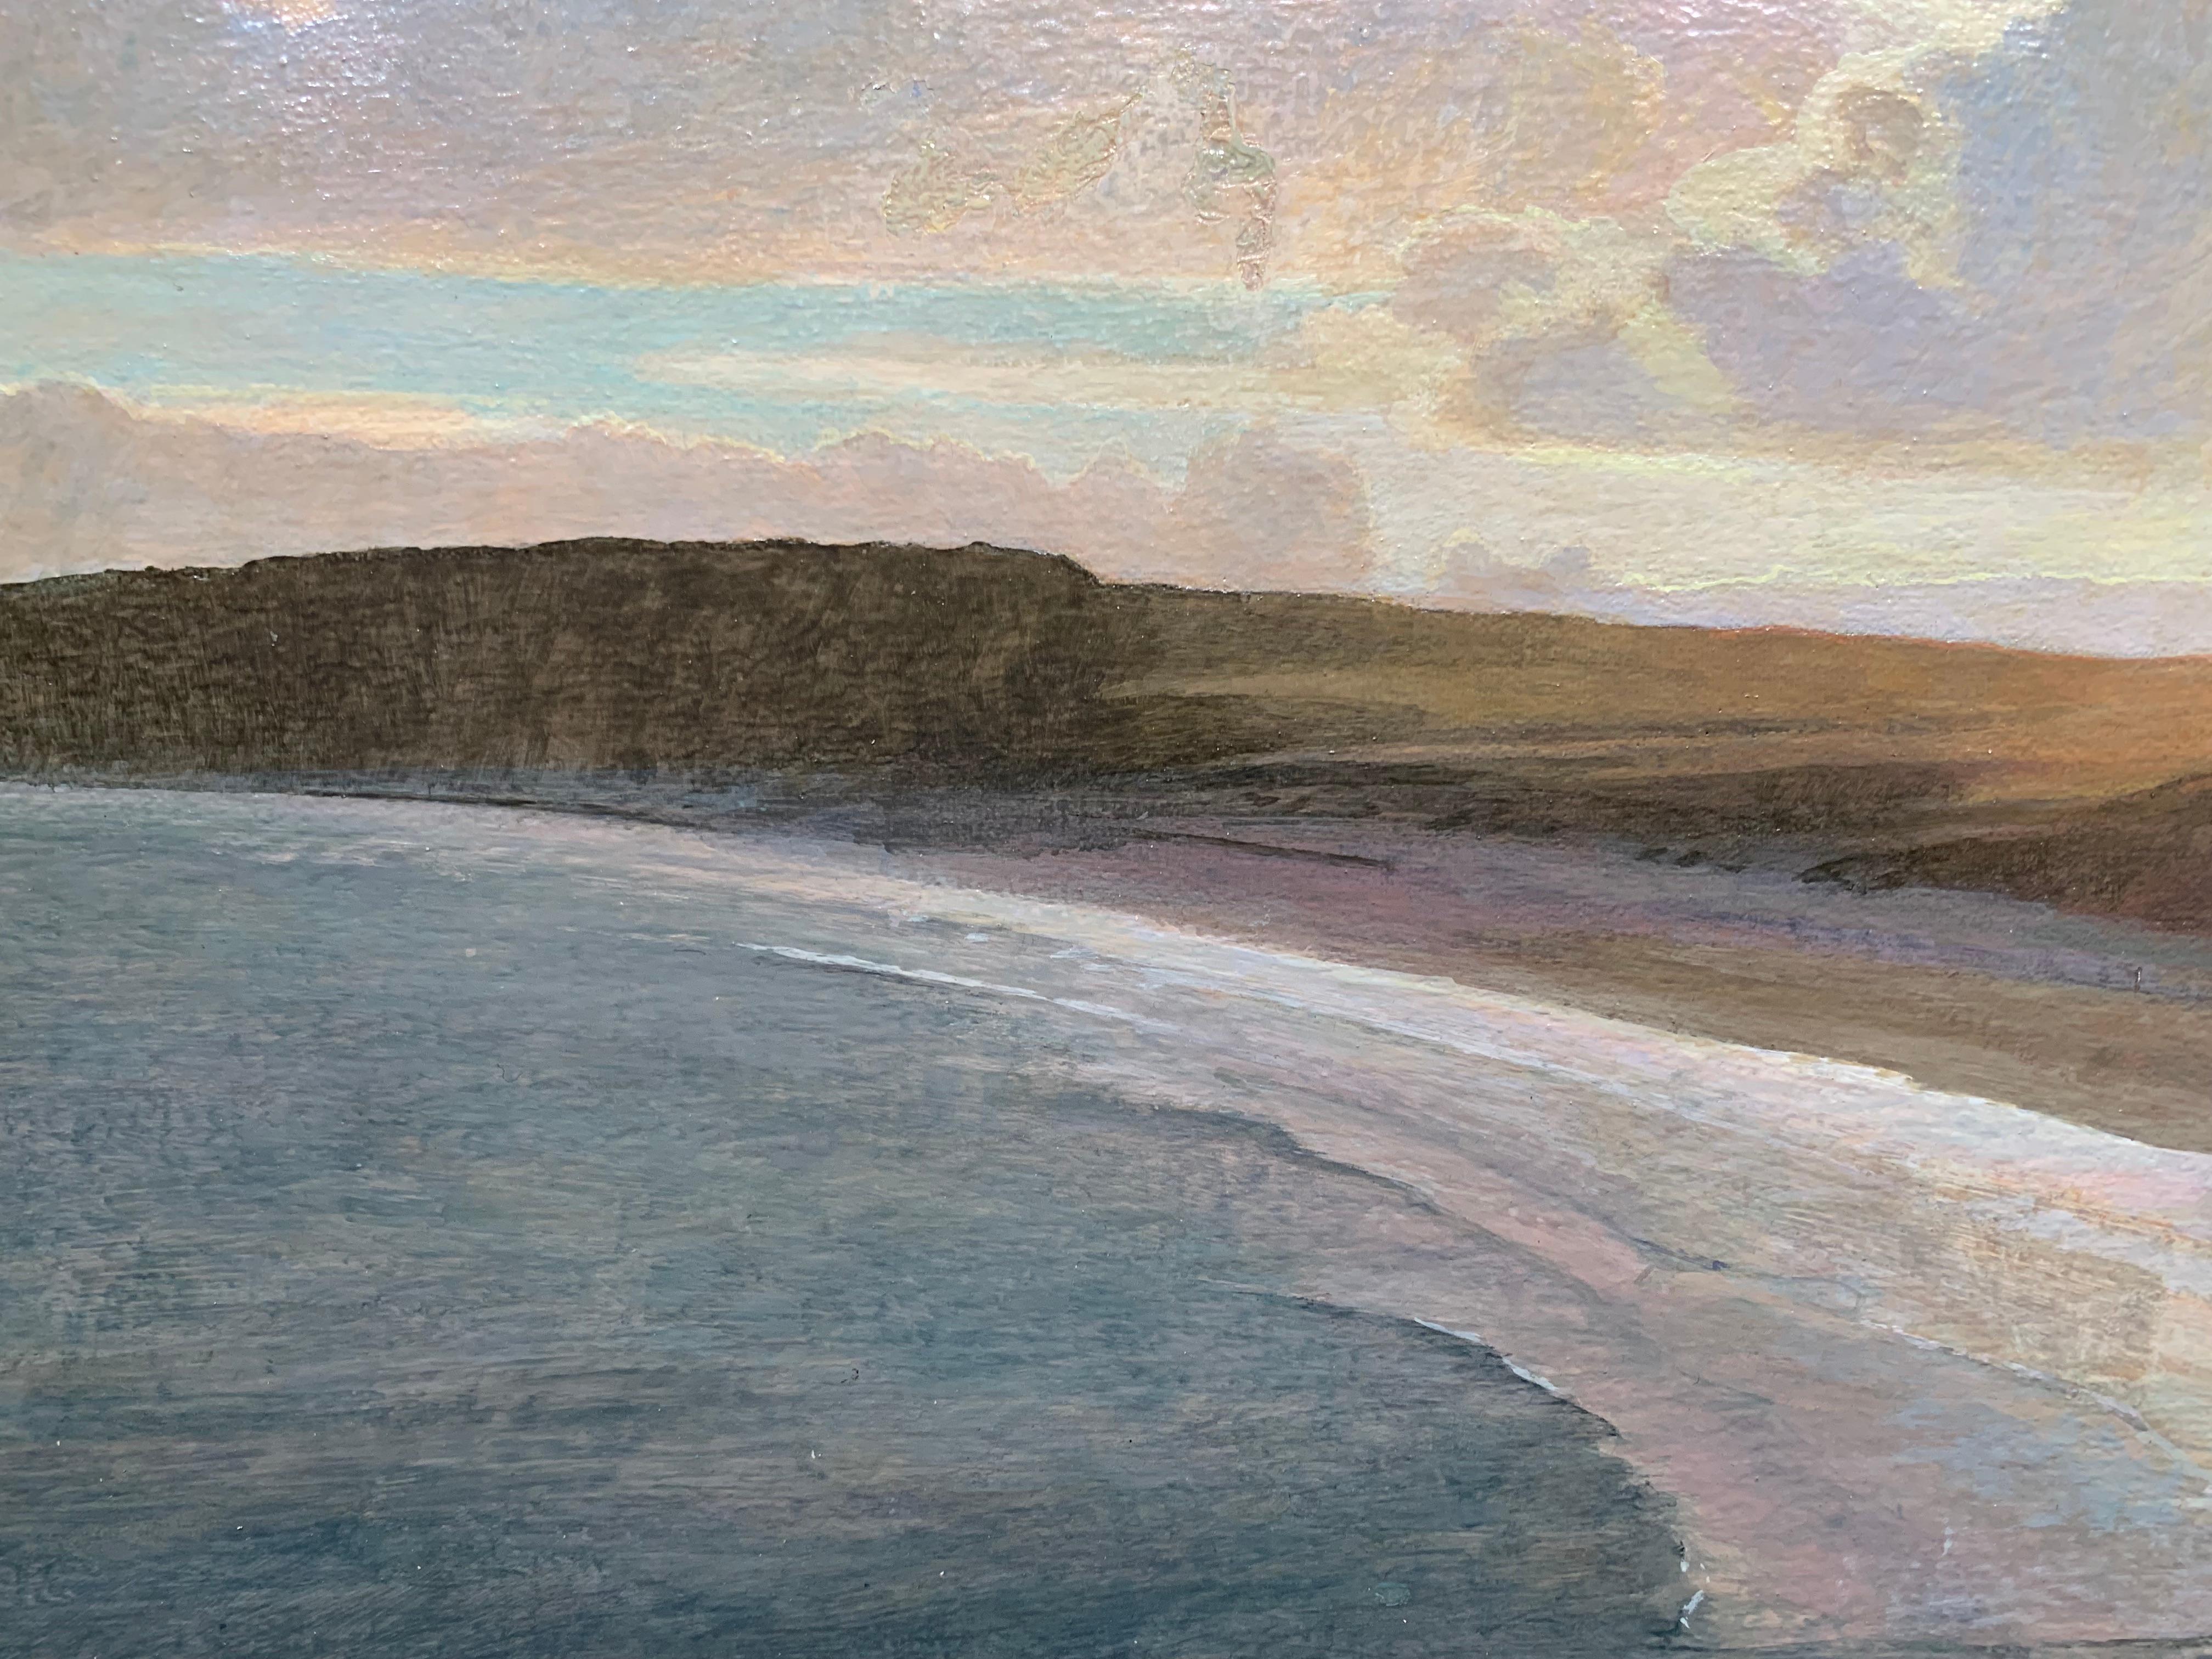 Hushinish, West Harris (Scotland seascape) - Painting by Ramsay Gibb